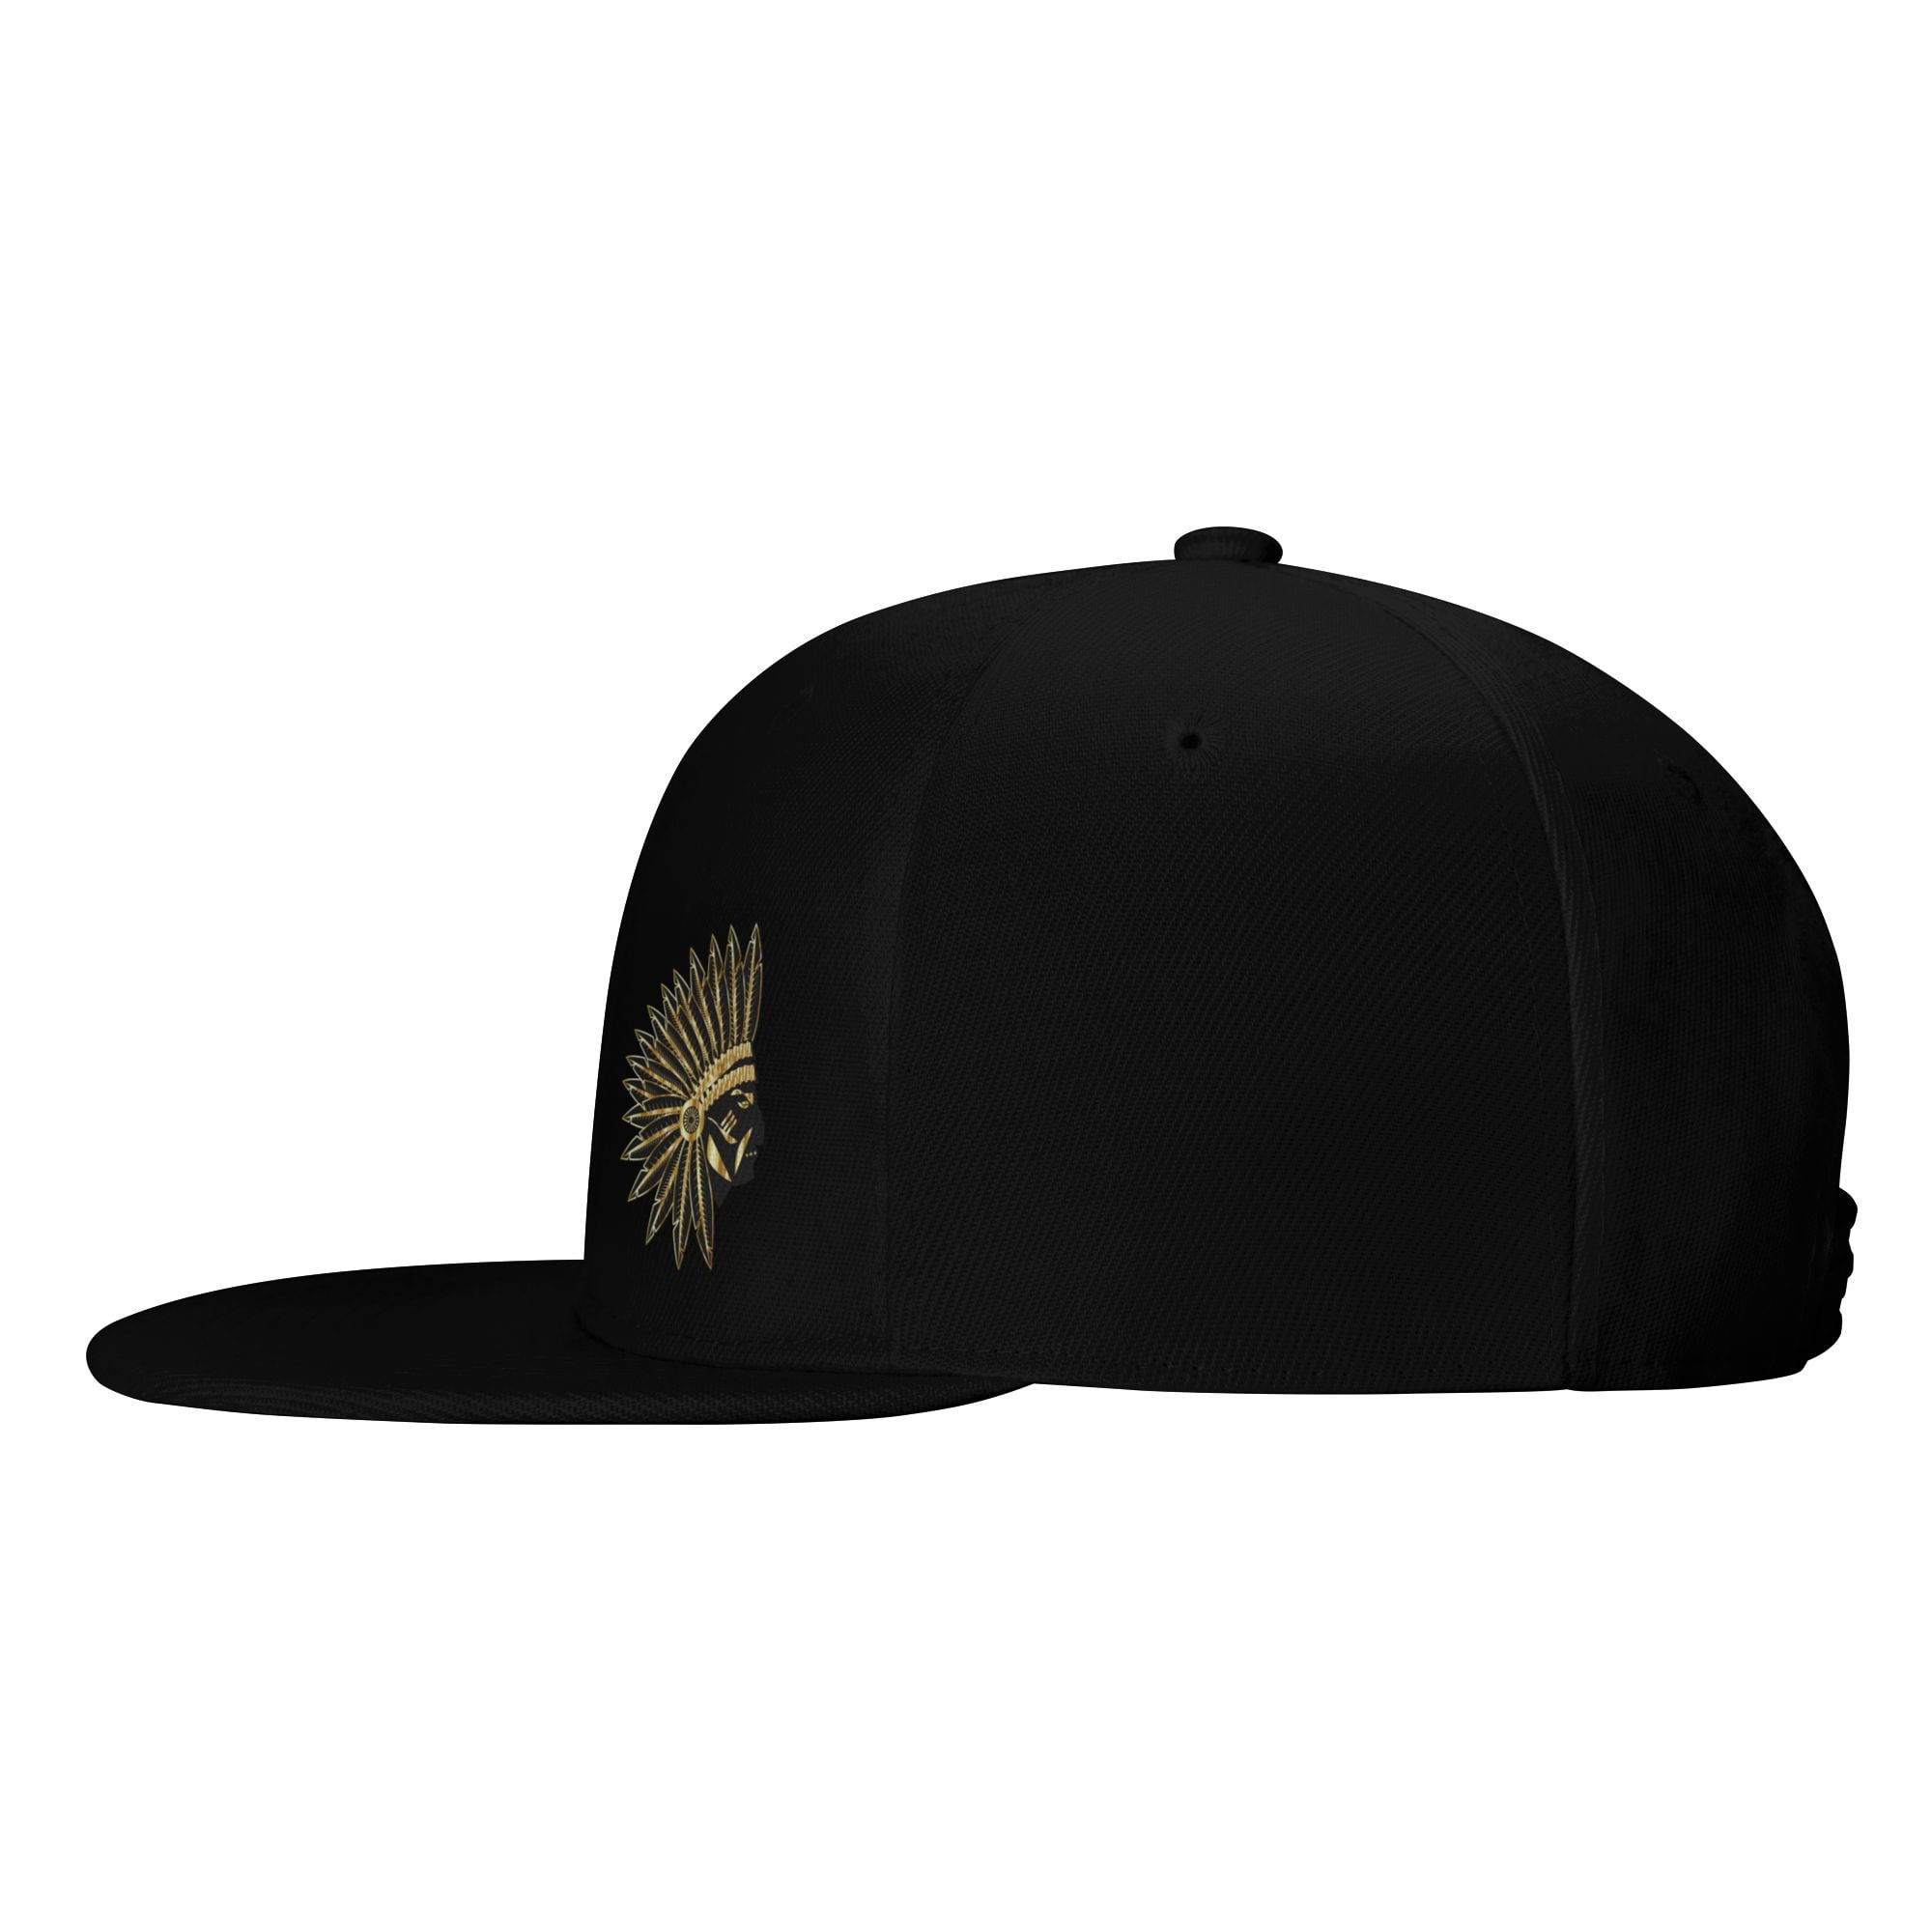 DouZhe Flat Brim Cap Snapback Hat, Gold Native American Feathers